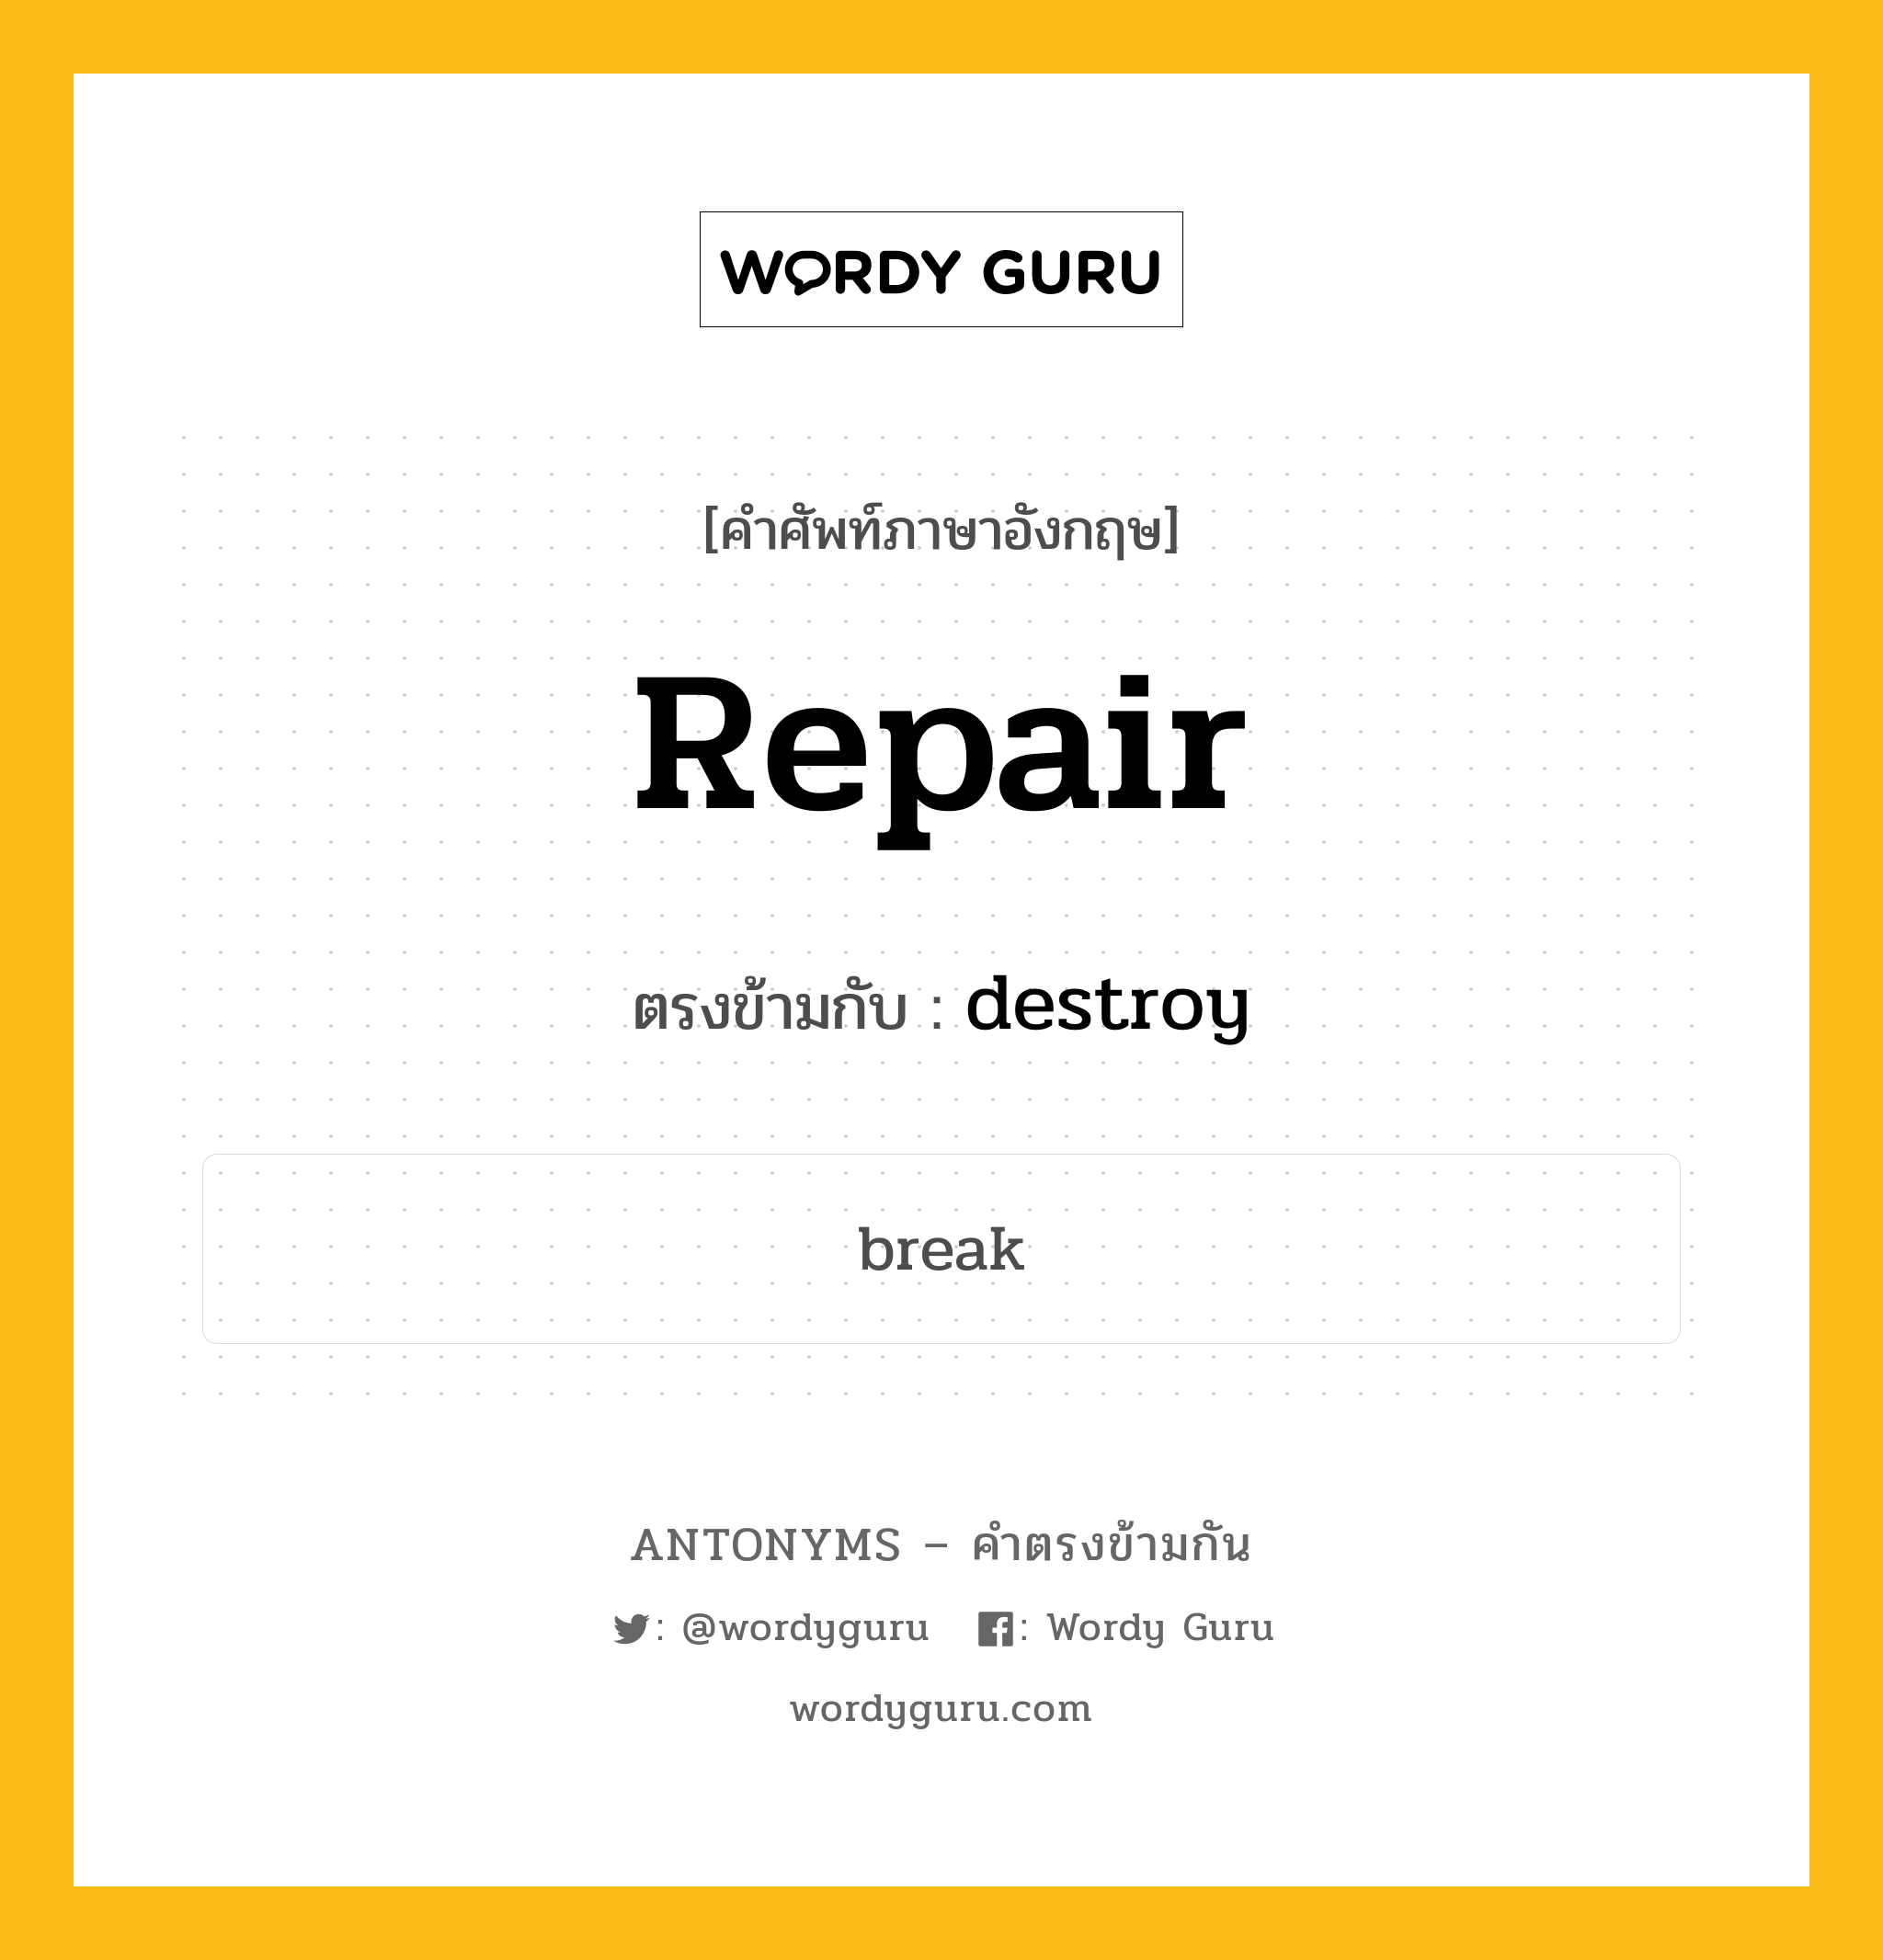 repair เป็นคำตรงข้ามกับคำไหนบ้าง?, คำศัพท์ภาษาอังกฤษ repair ตรงข้ามกับ destroy หมวด destroy